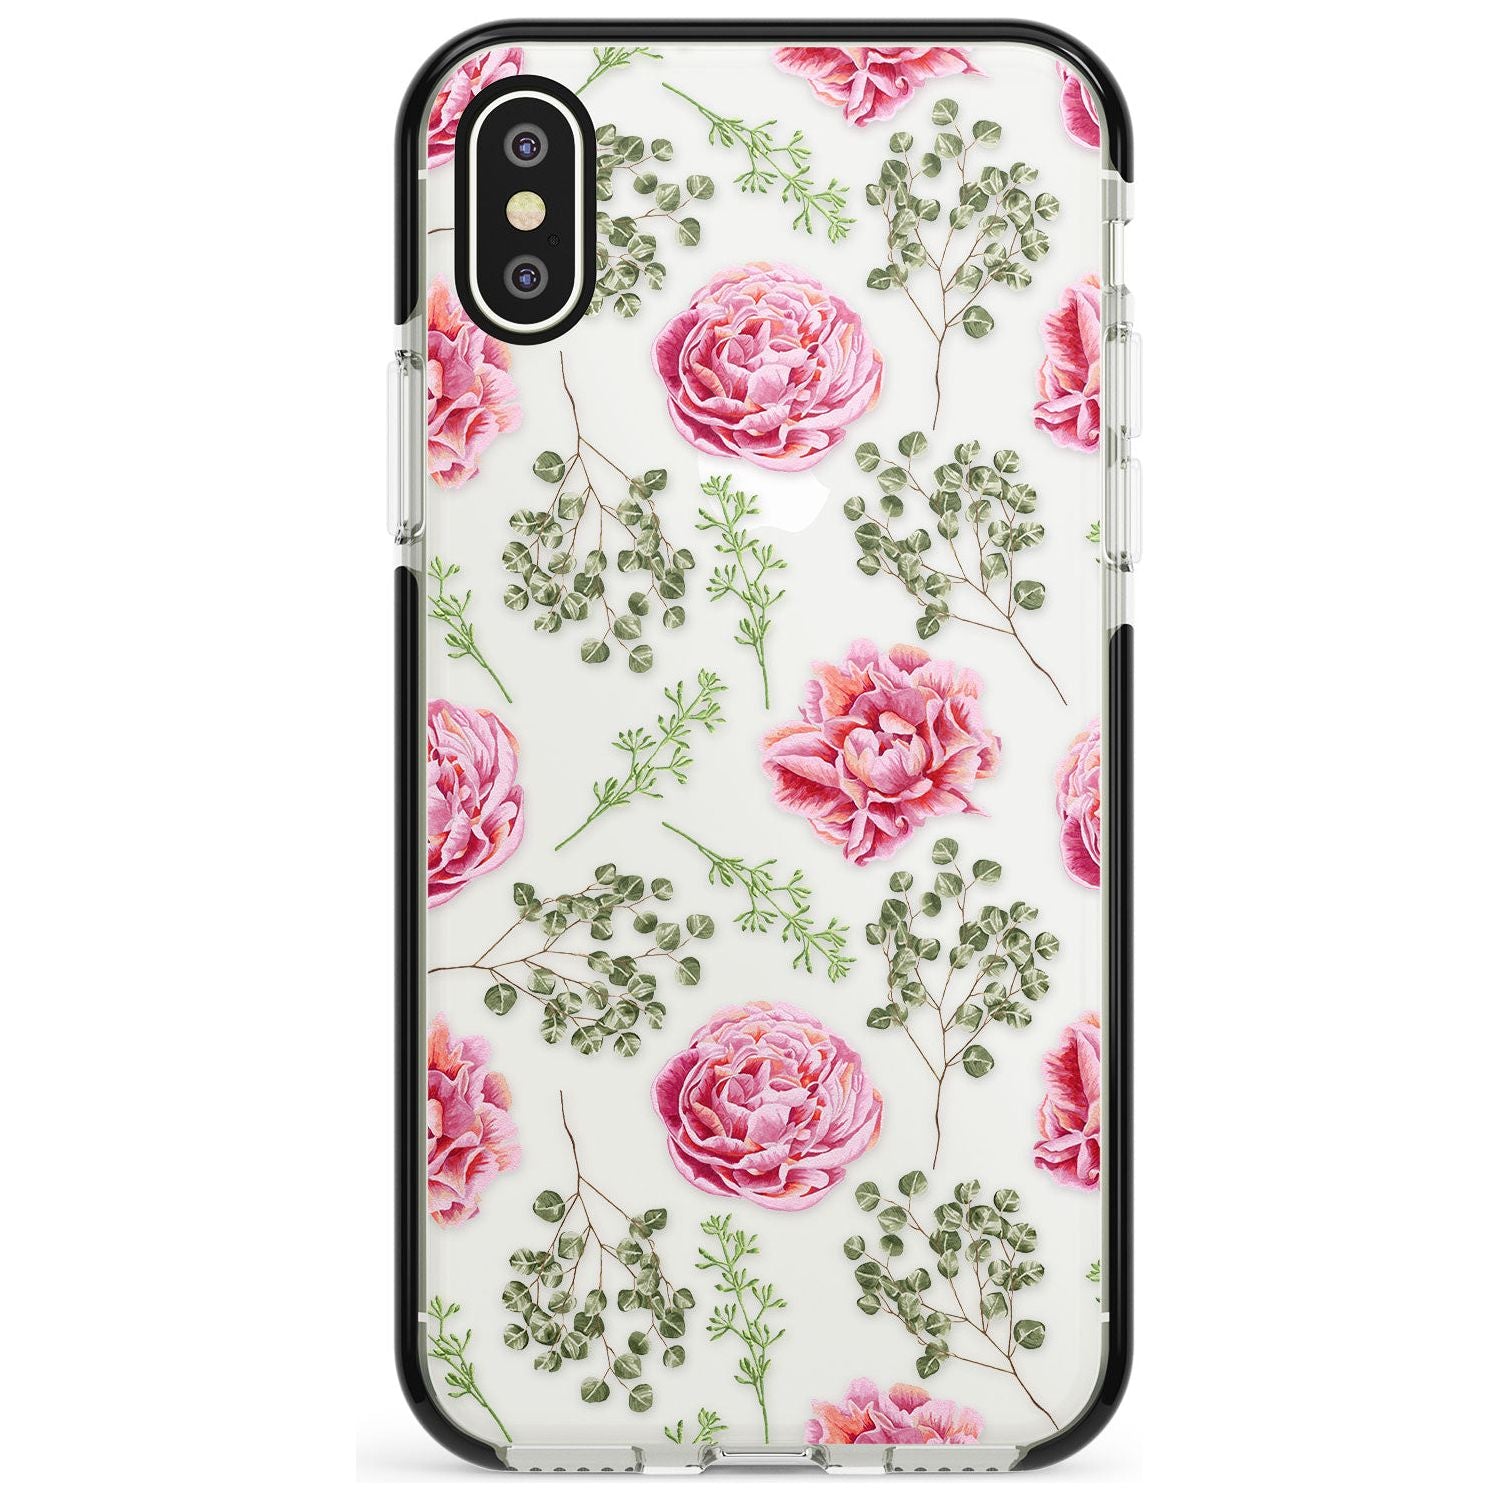 Roses & Eucalyptus Transparent Floral Black Impact Phone Case for iPhone X XS Max XR